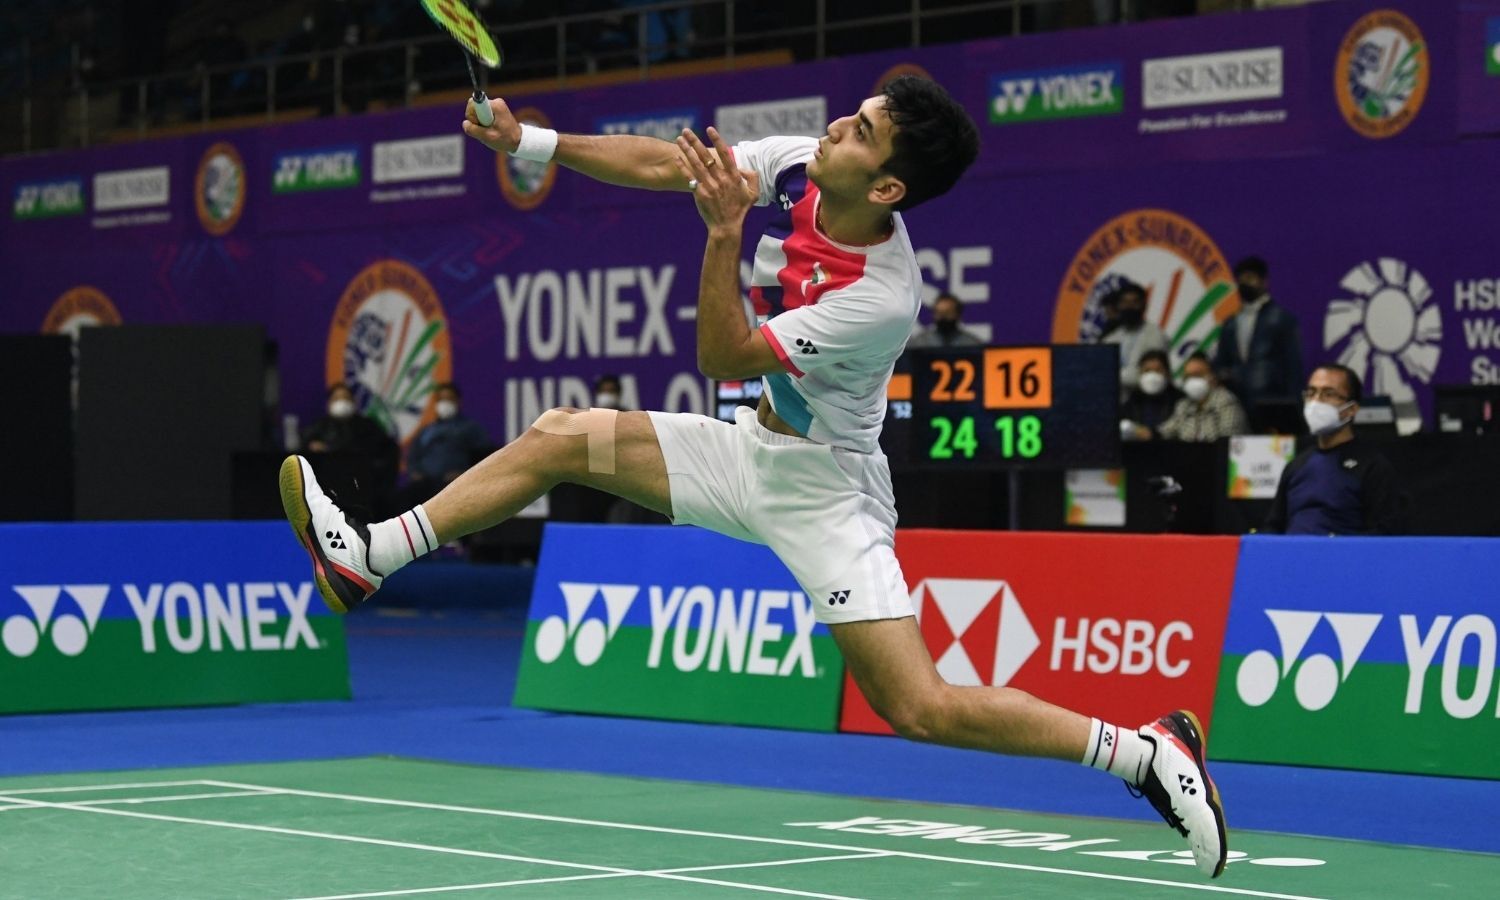 Asia championship badminton 2022